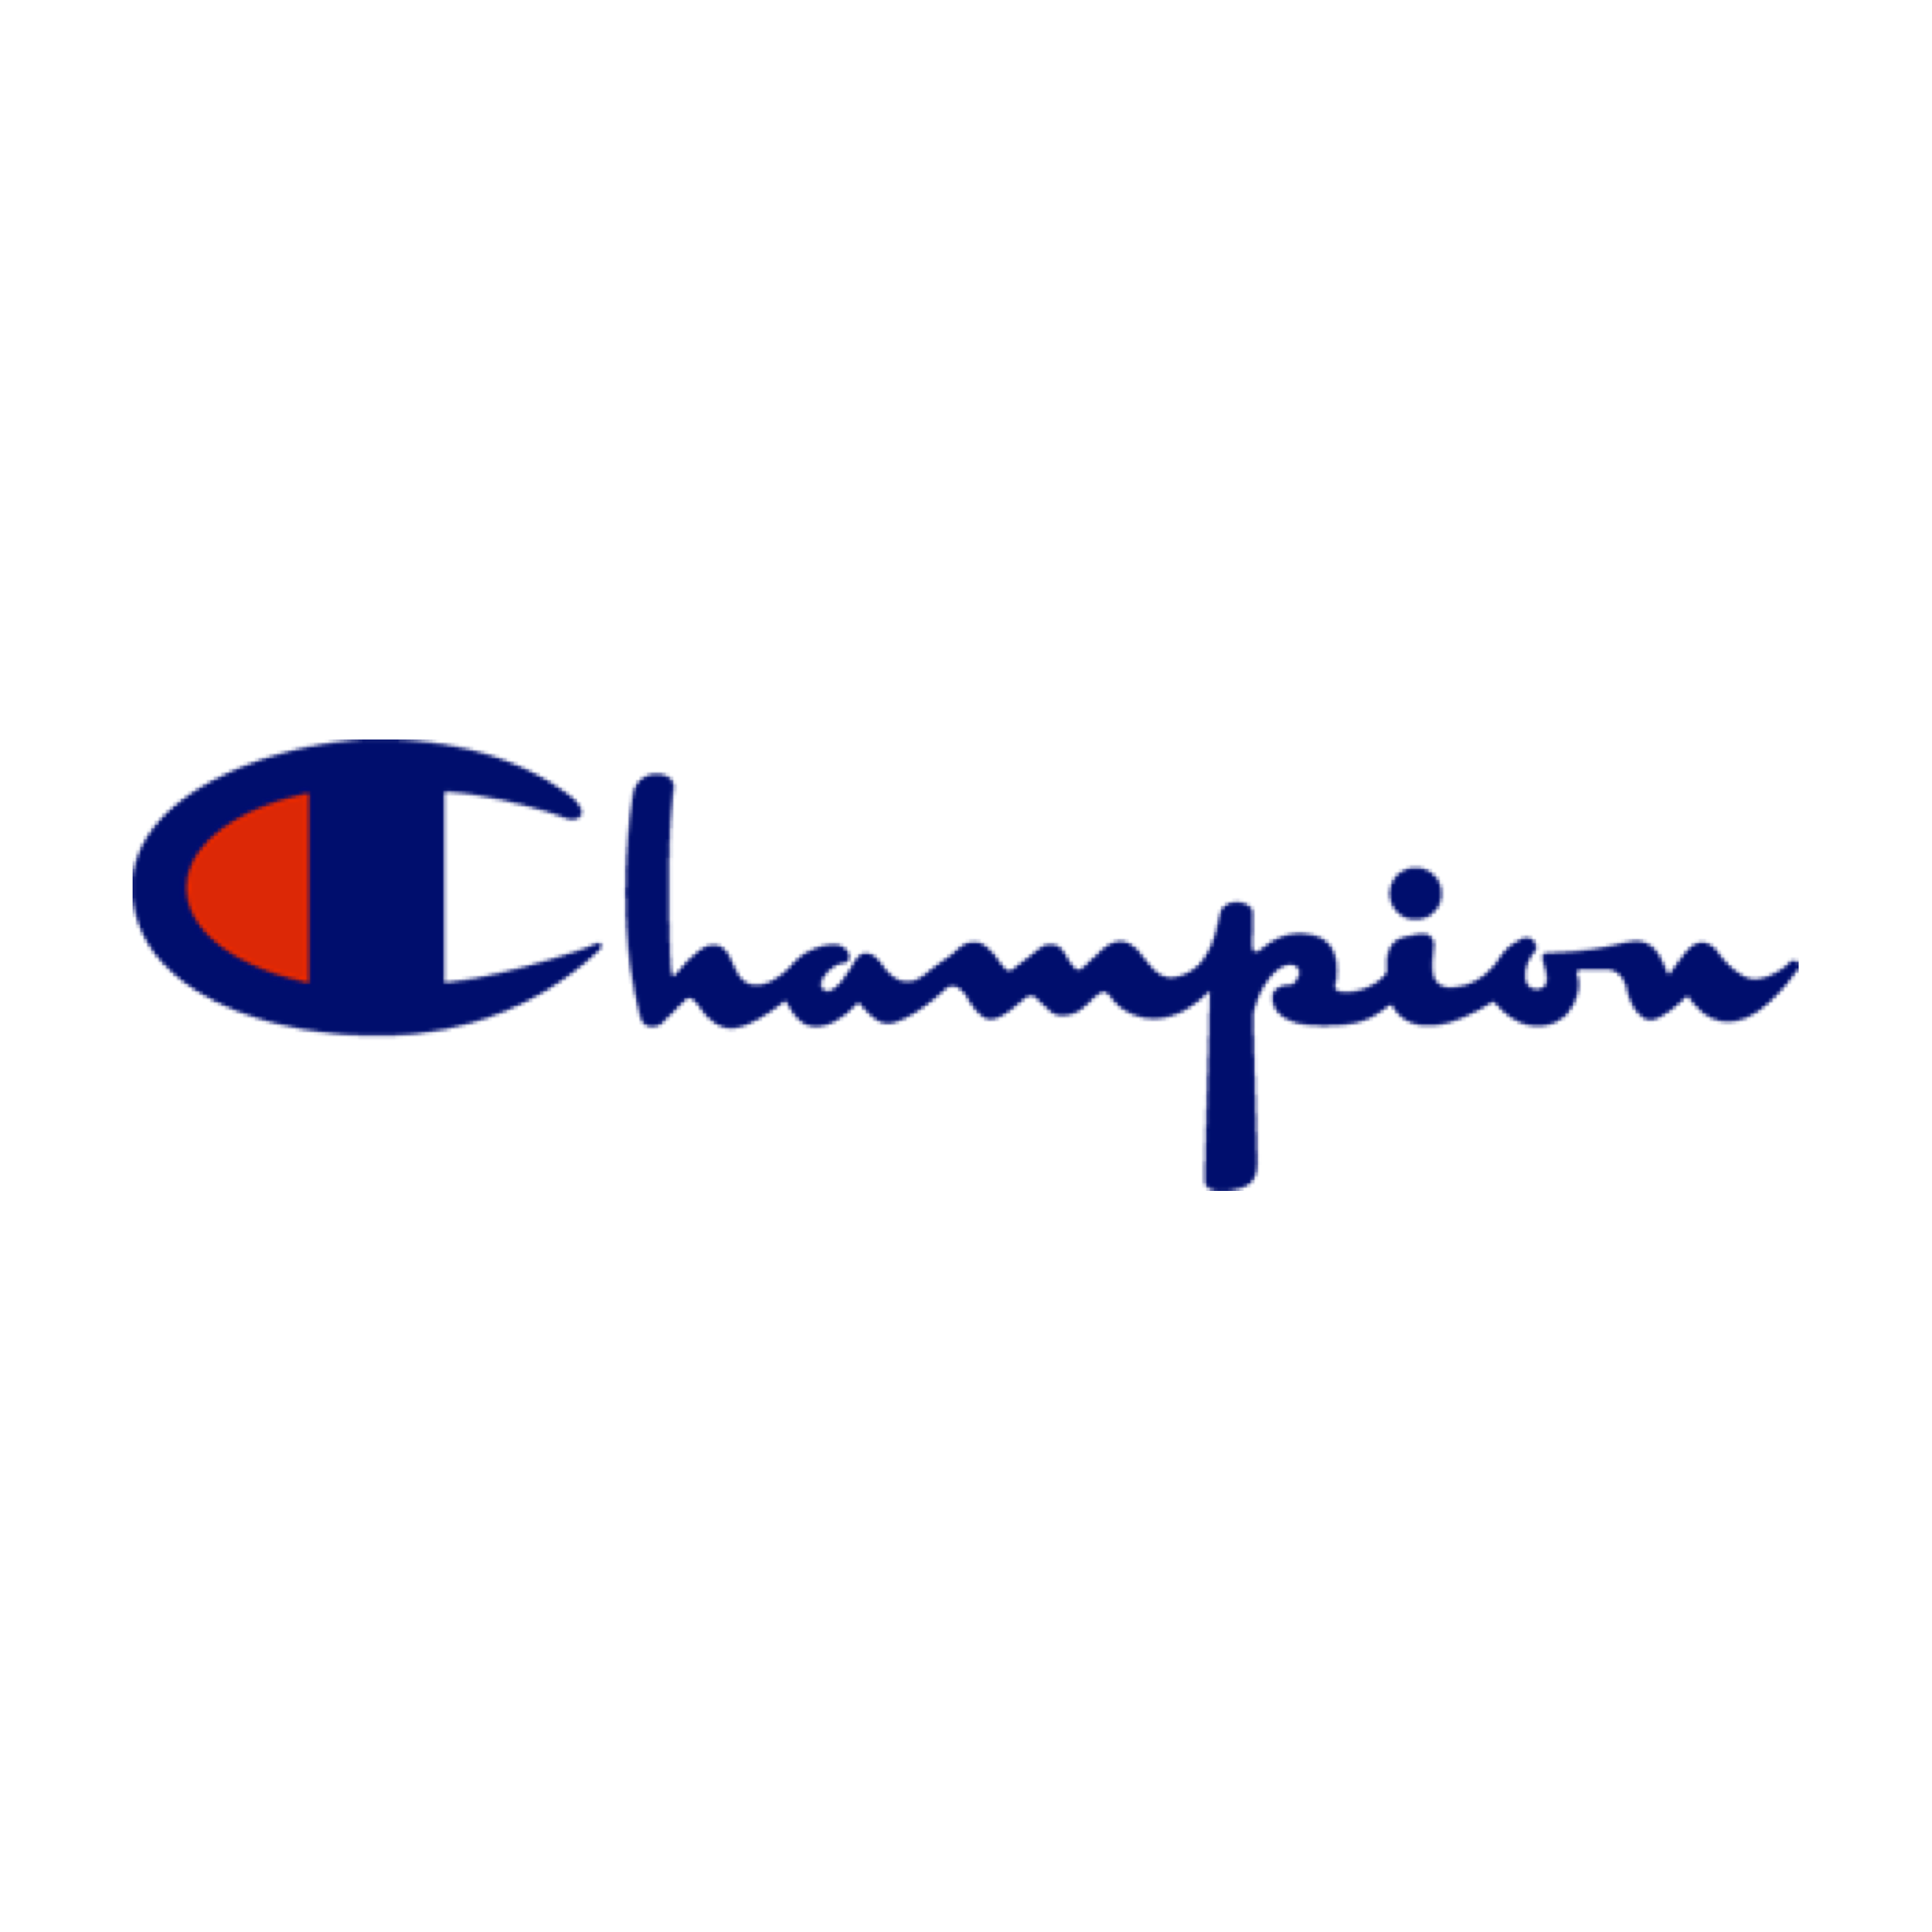 Blue Champion Logo - Champion | BRANDS in 2019 | Champion logo, Champion, Logos